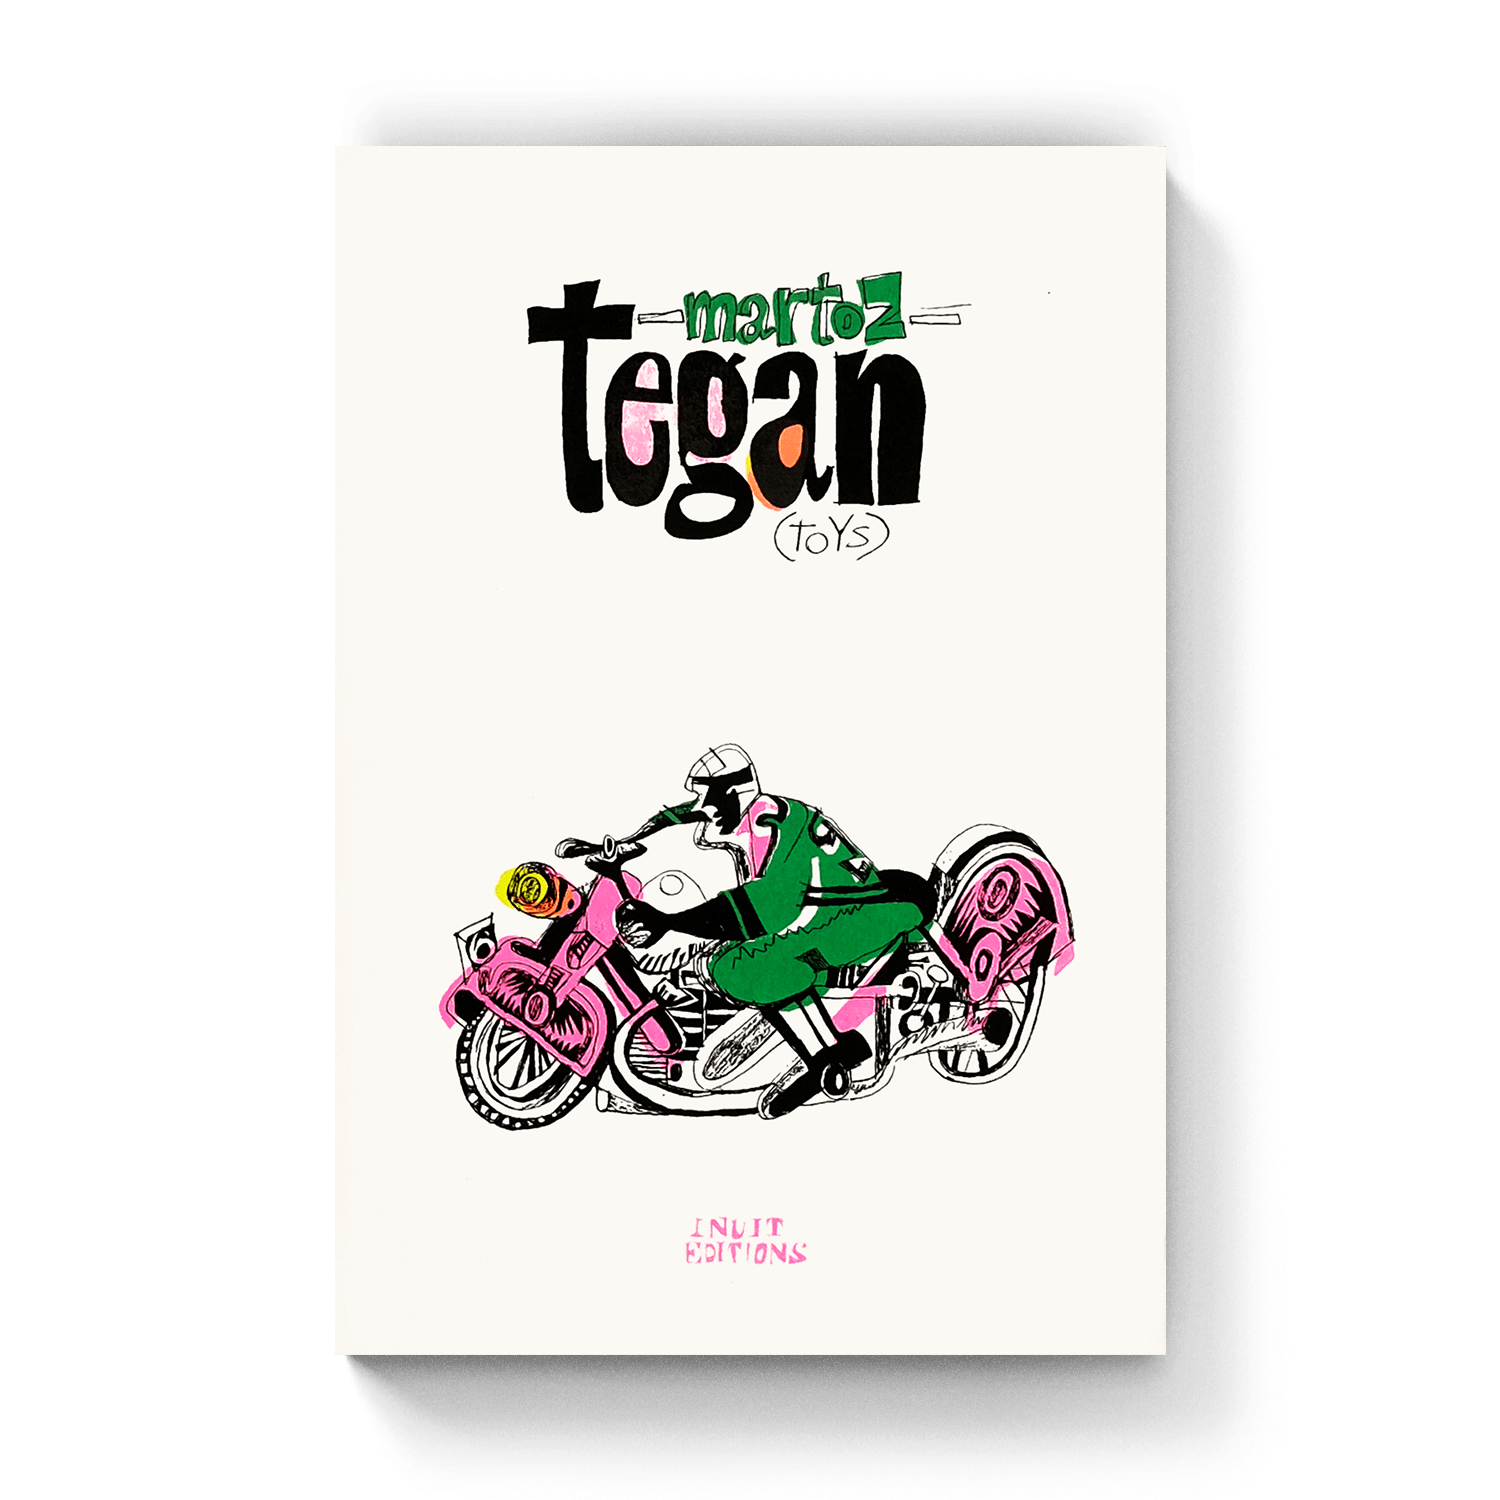 Tegan (toys)